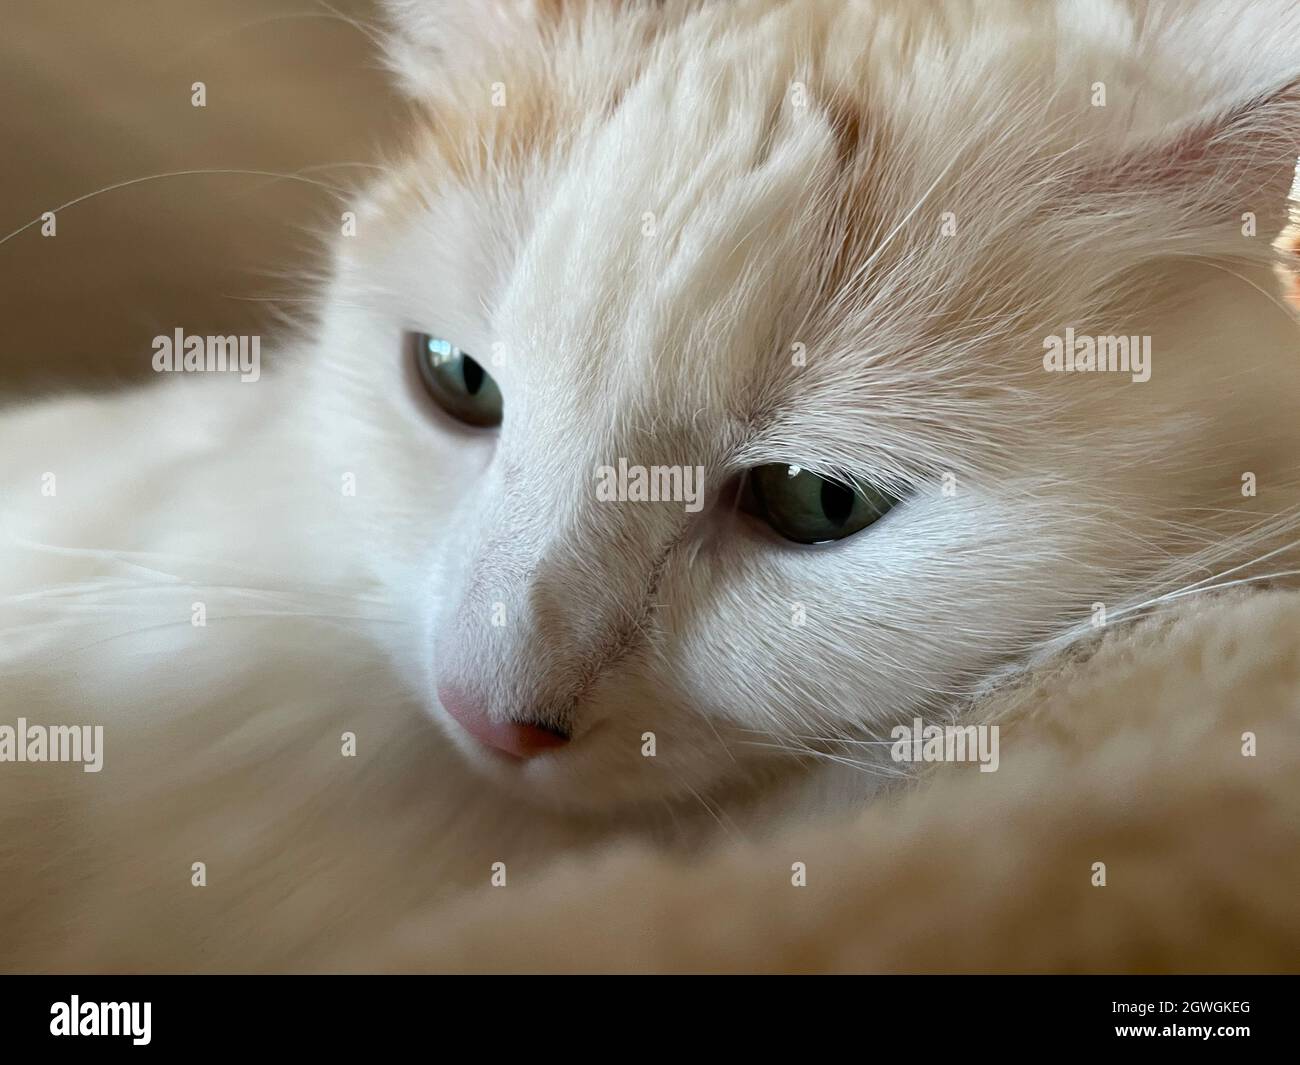 Nahaufnahme einer Katze Stockfotografie - Alamy